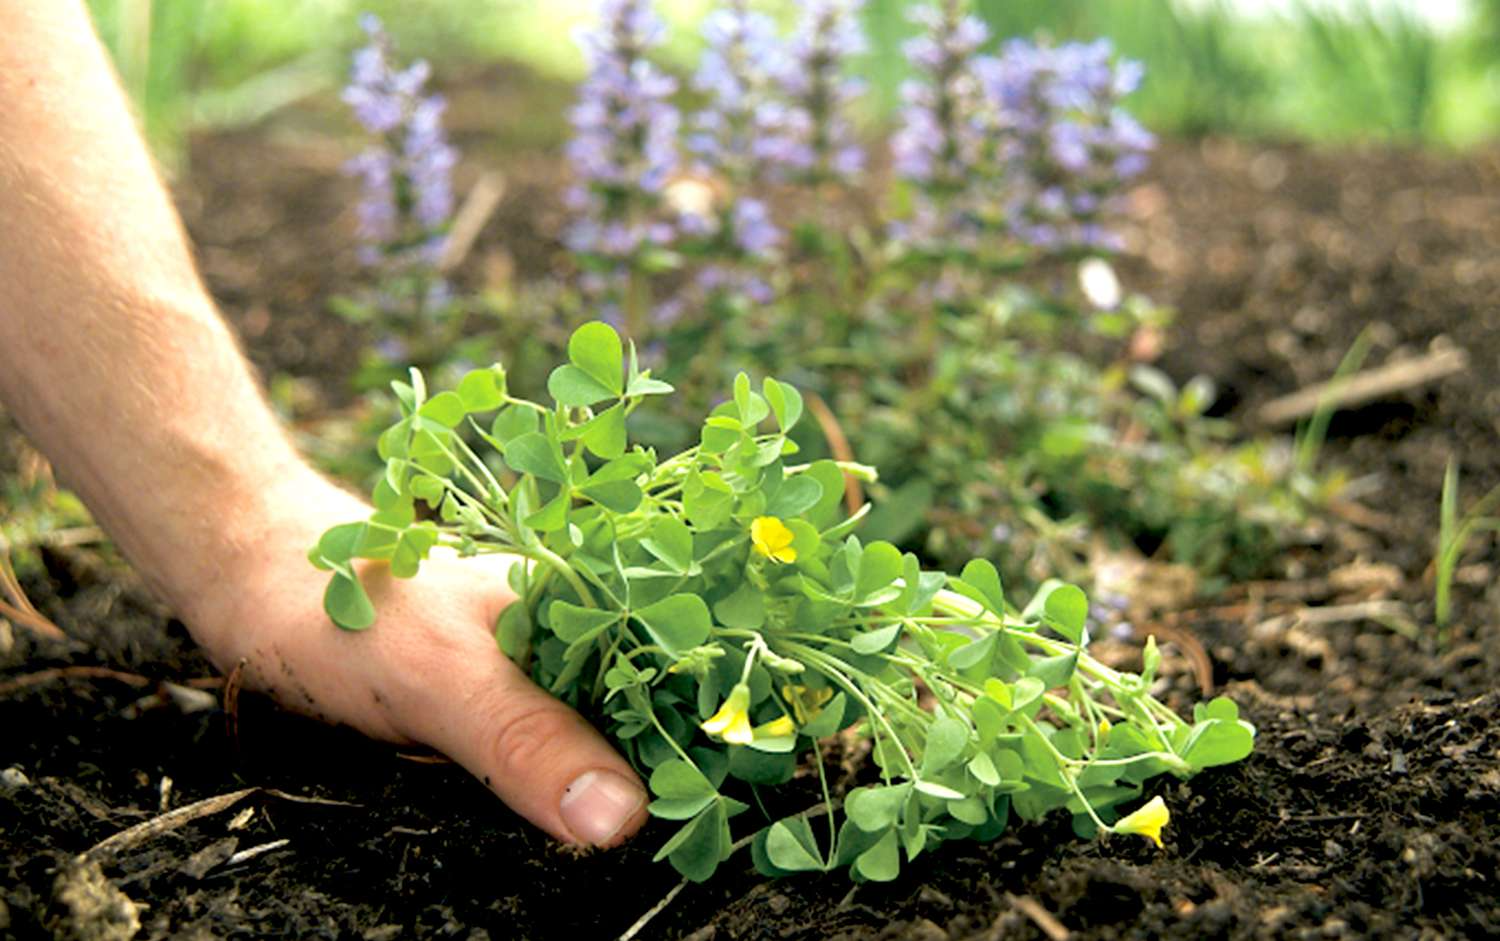 Identifying The Weeds In Your Garden